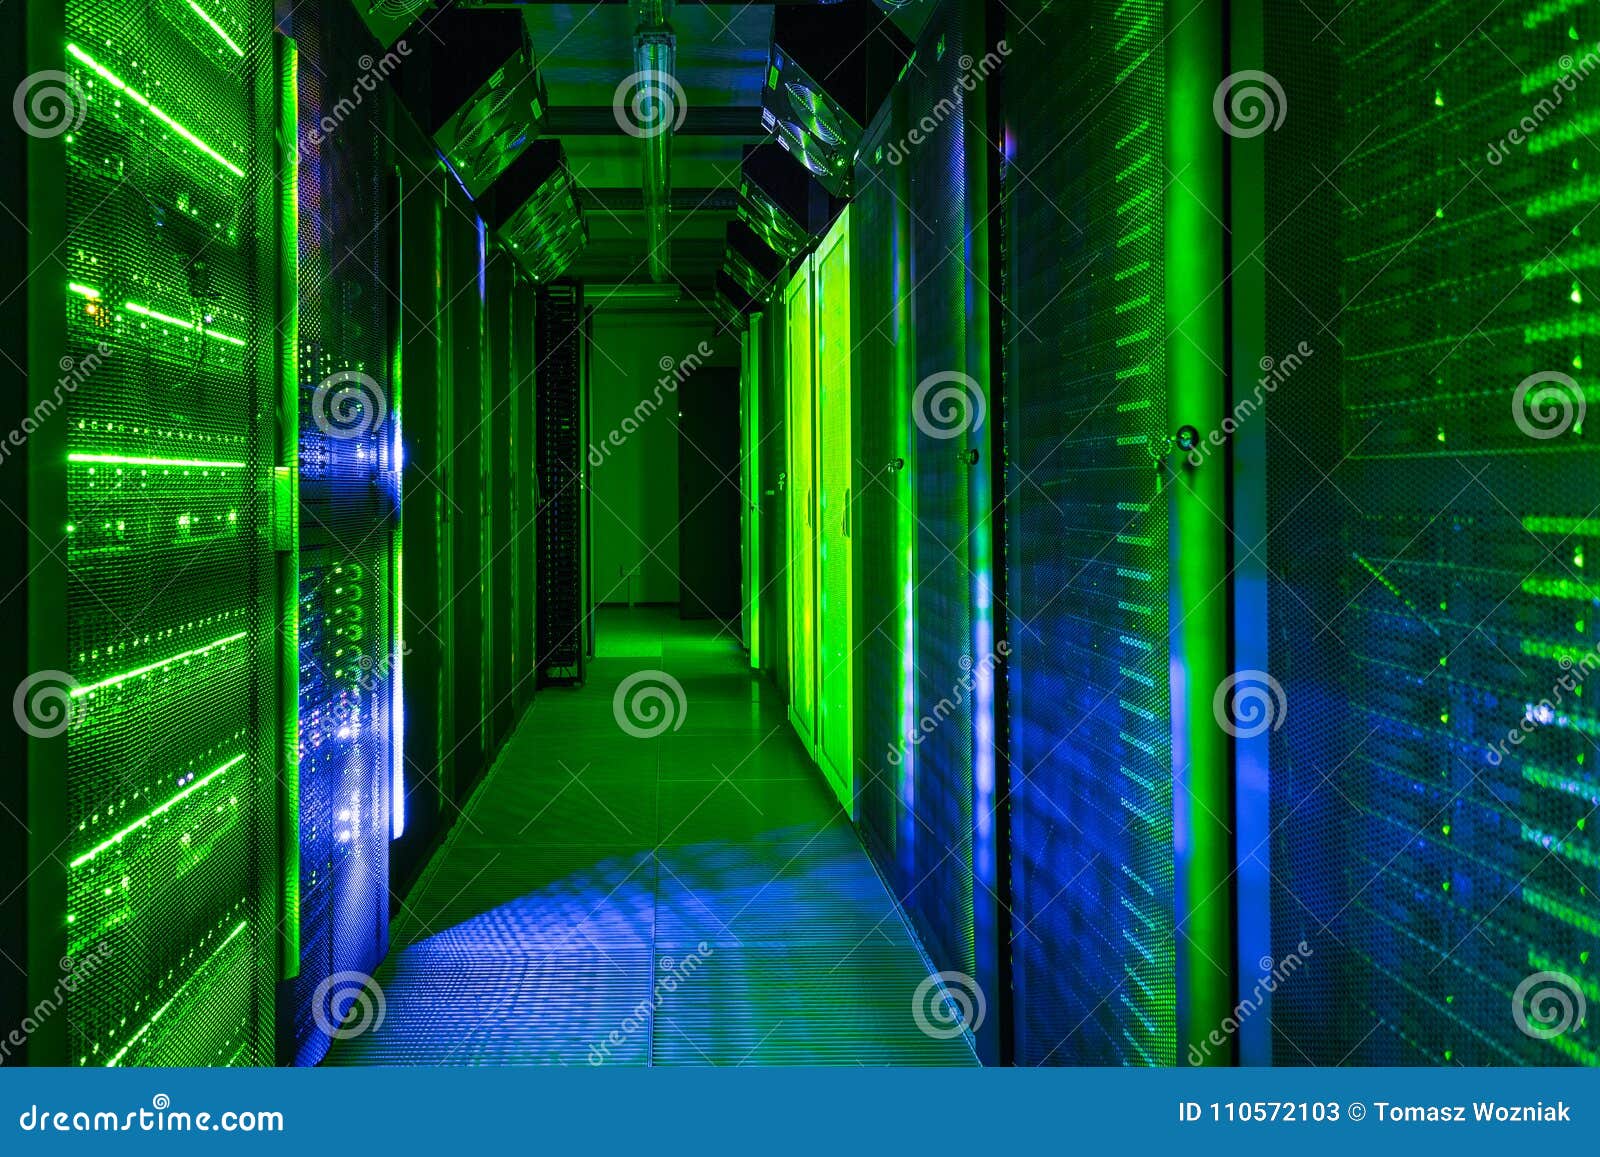 data center, server room. internet and network telecommunication technology.